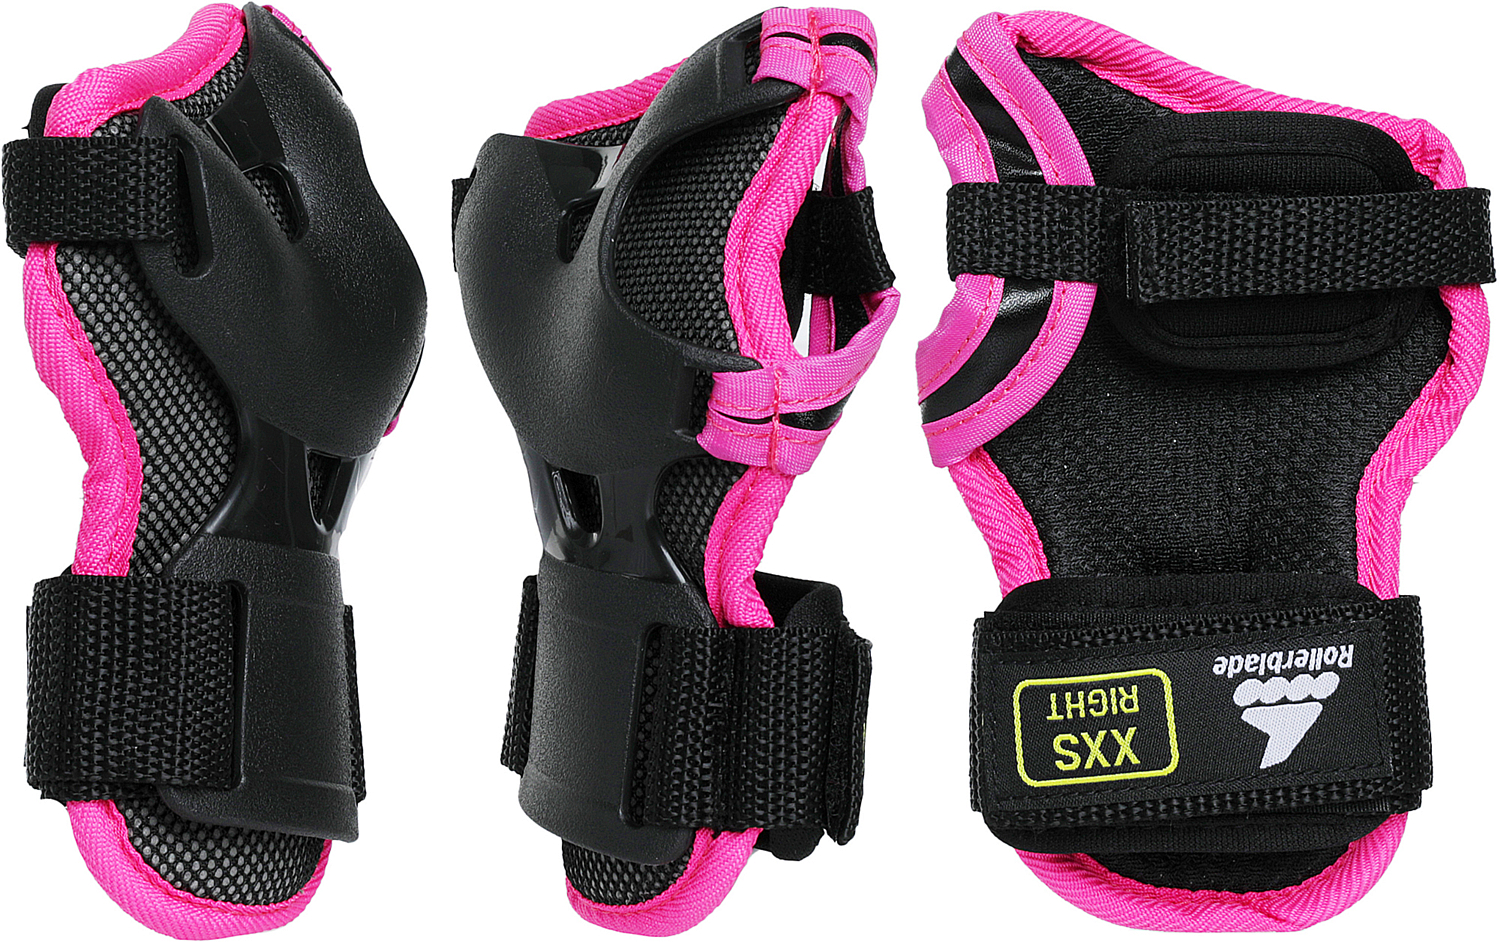 Комплект защиты Rollerblade Skate Gear Junior 3 Pack Black/Pink